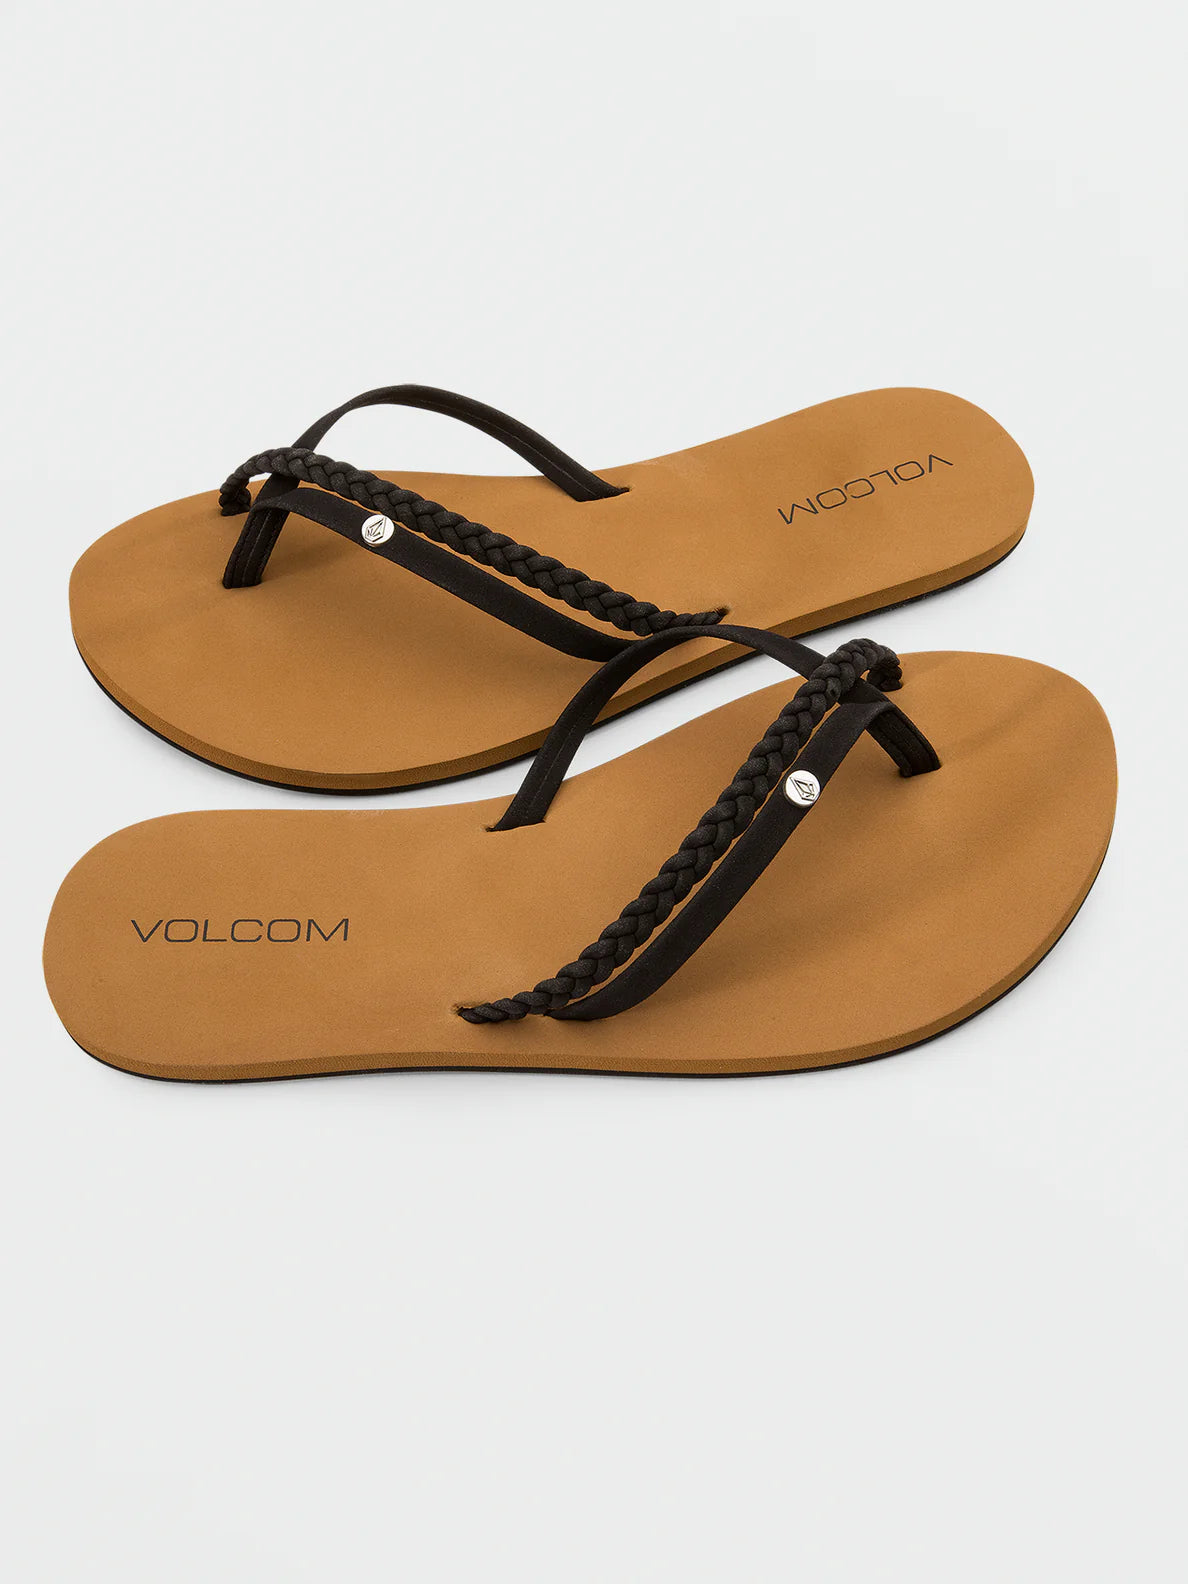 Volcom Thrills II Sandals